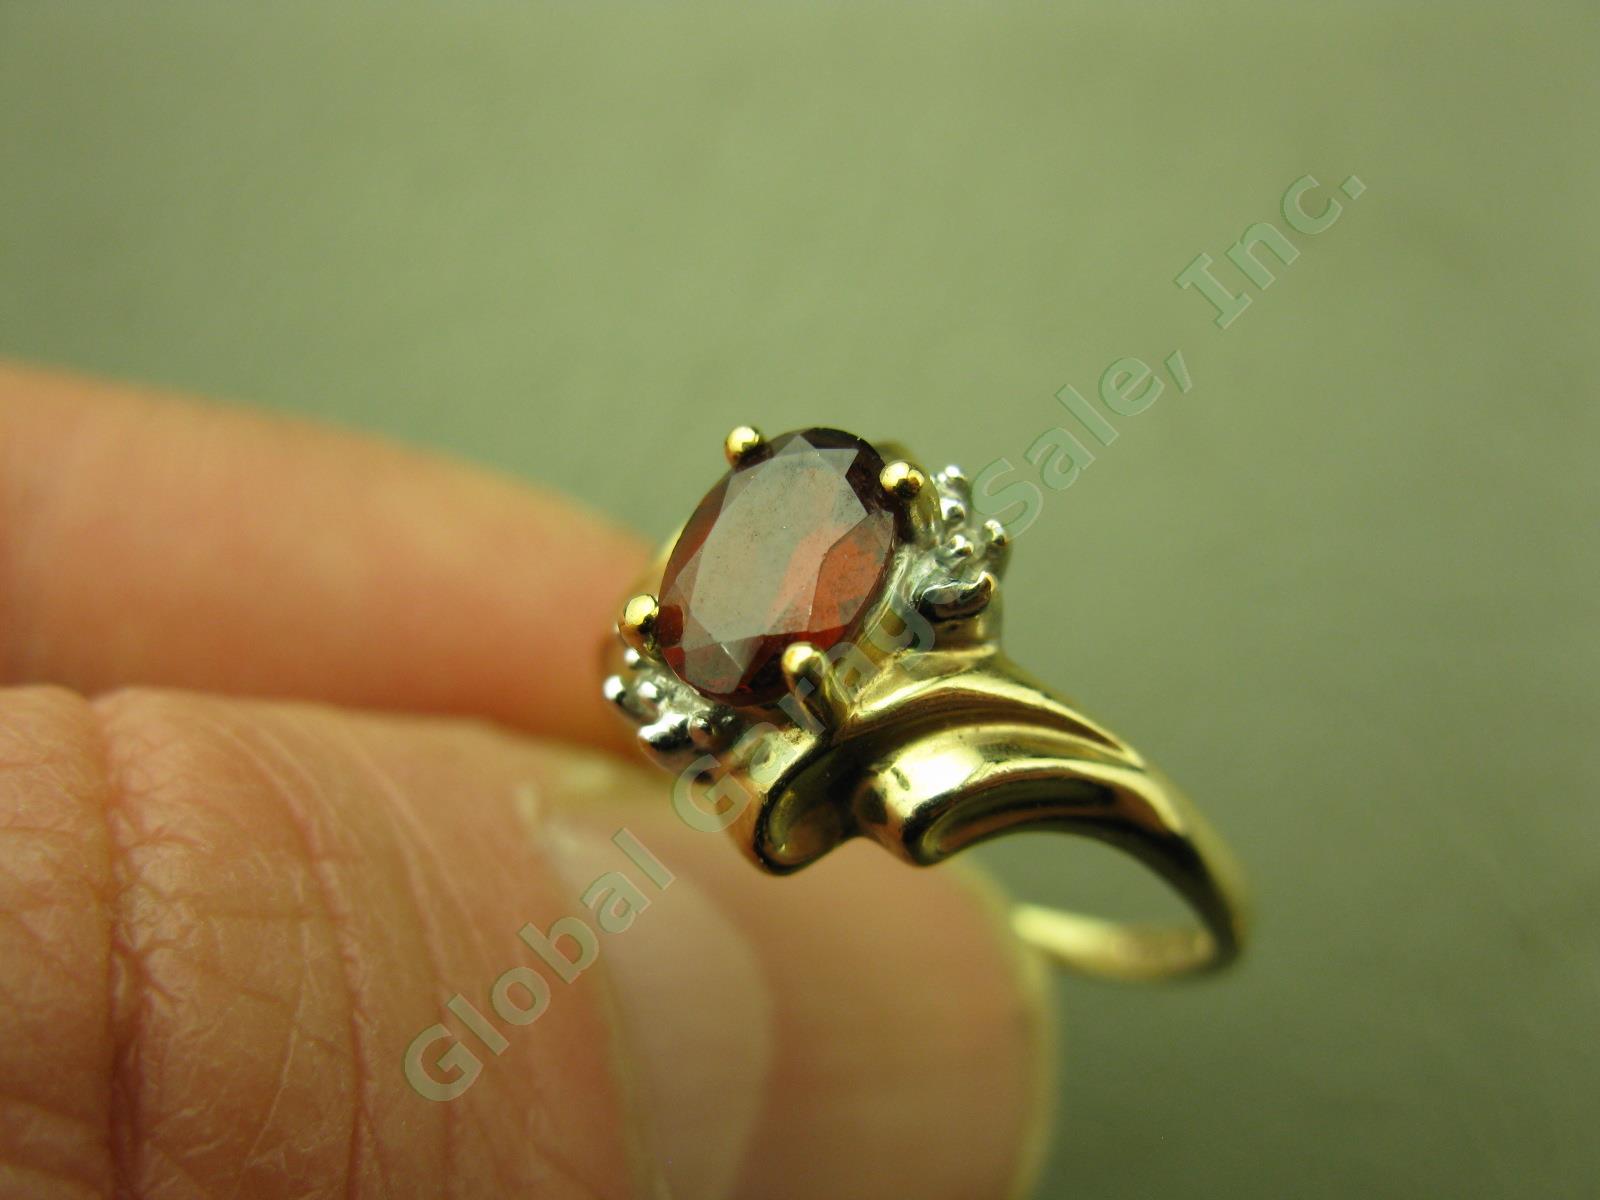 Vtg CRP 10K Yellow Gold Garnet Diamond Ring + Amethyst Earrings Pair Jewelry Lot 3